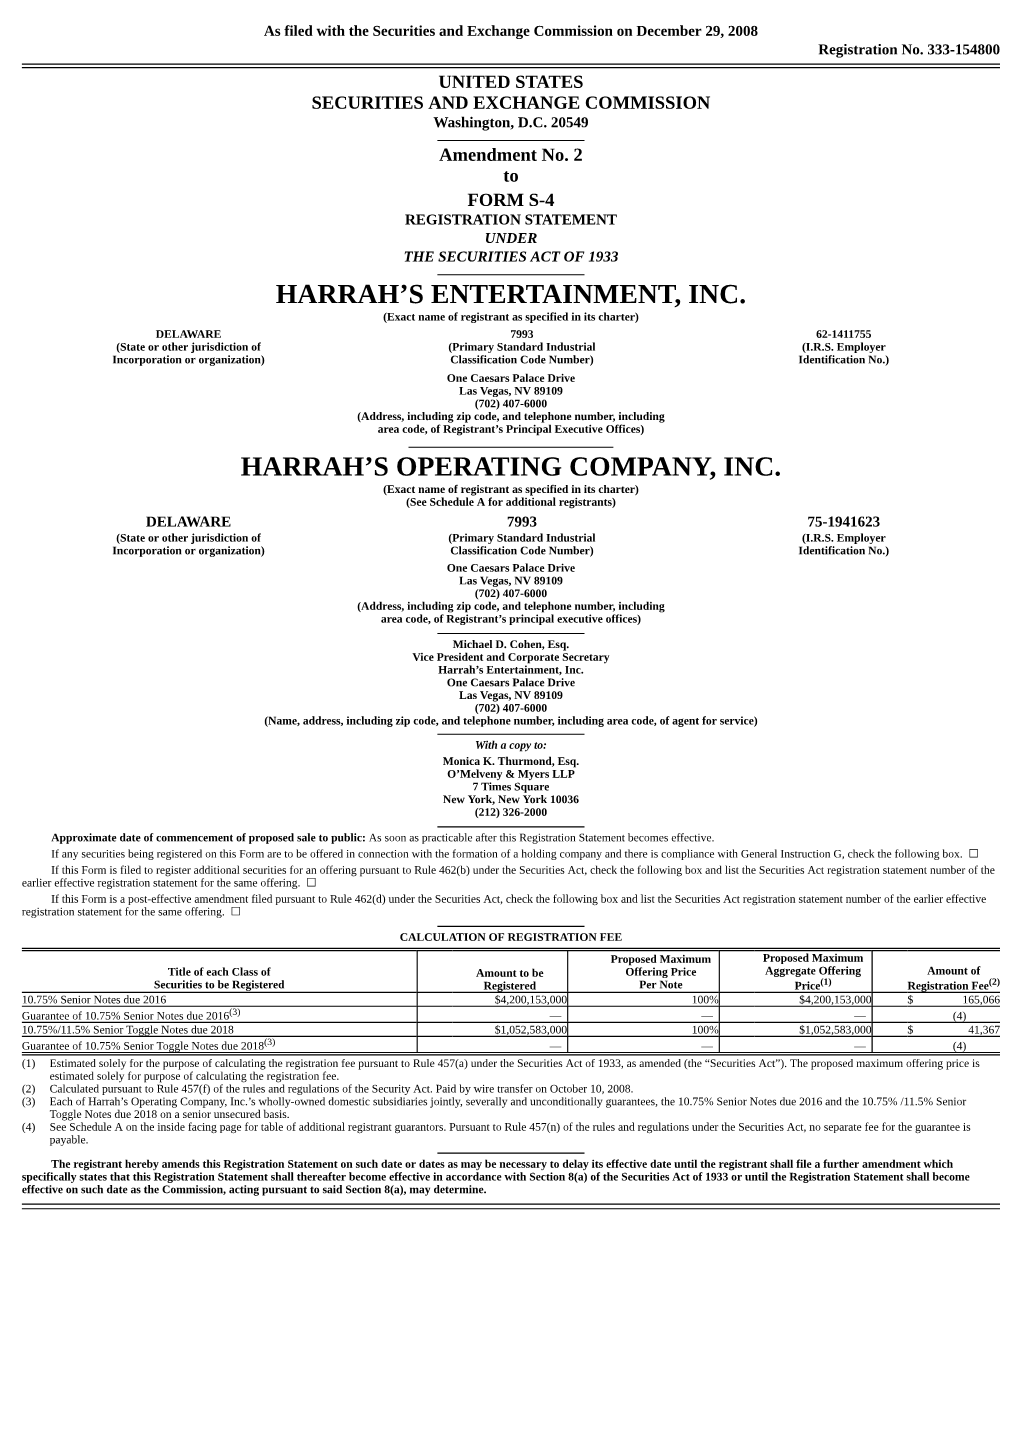 Harrah's Entertainment, Inc. Harrah's